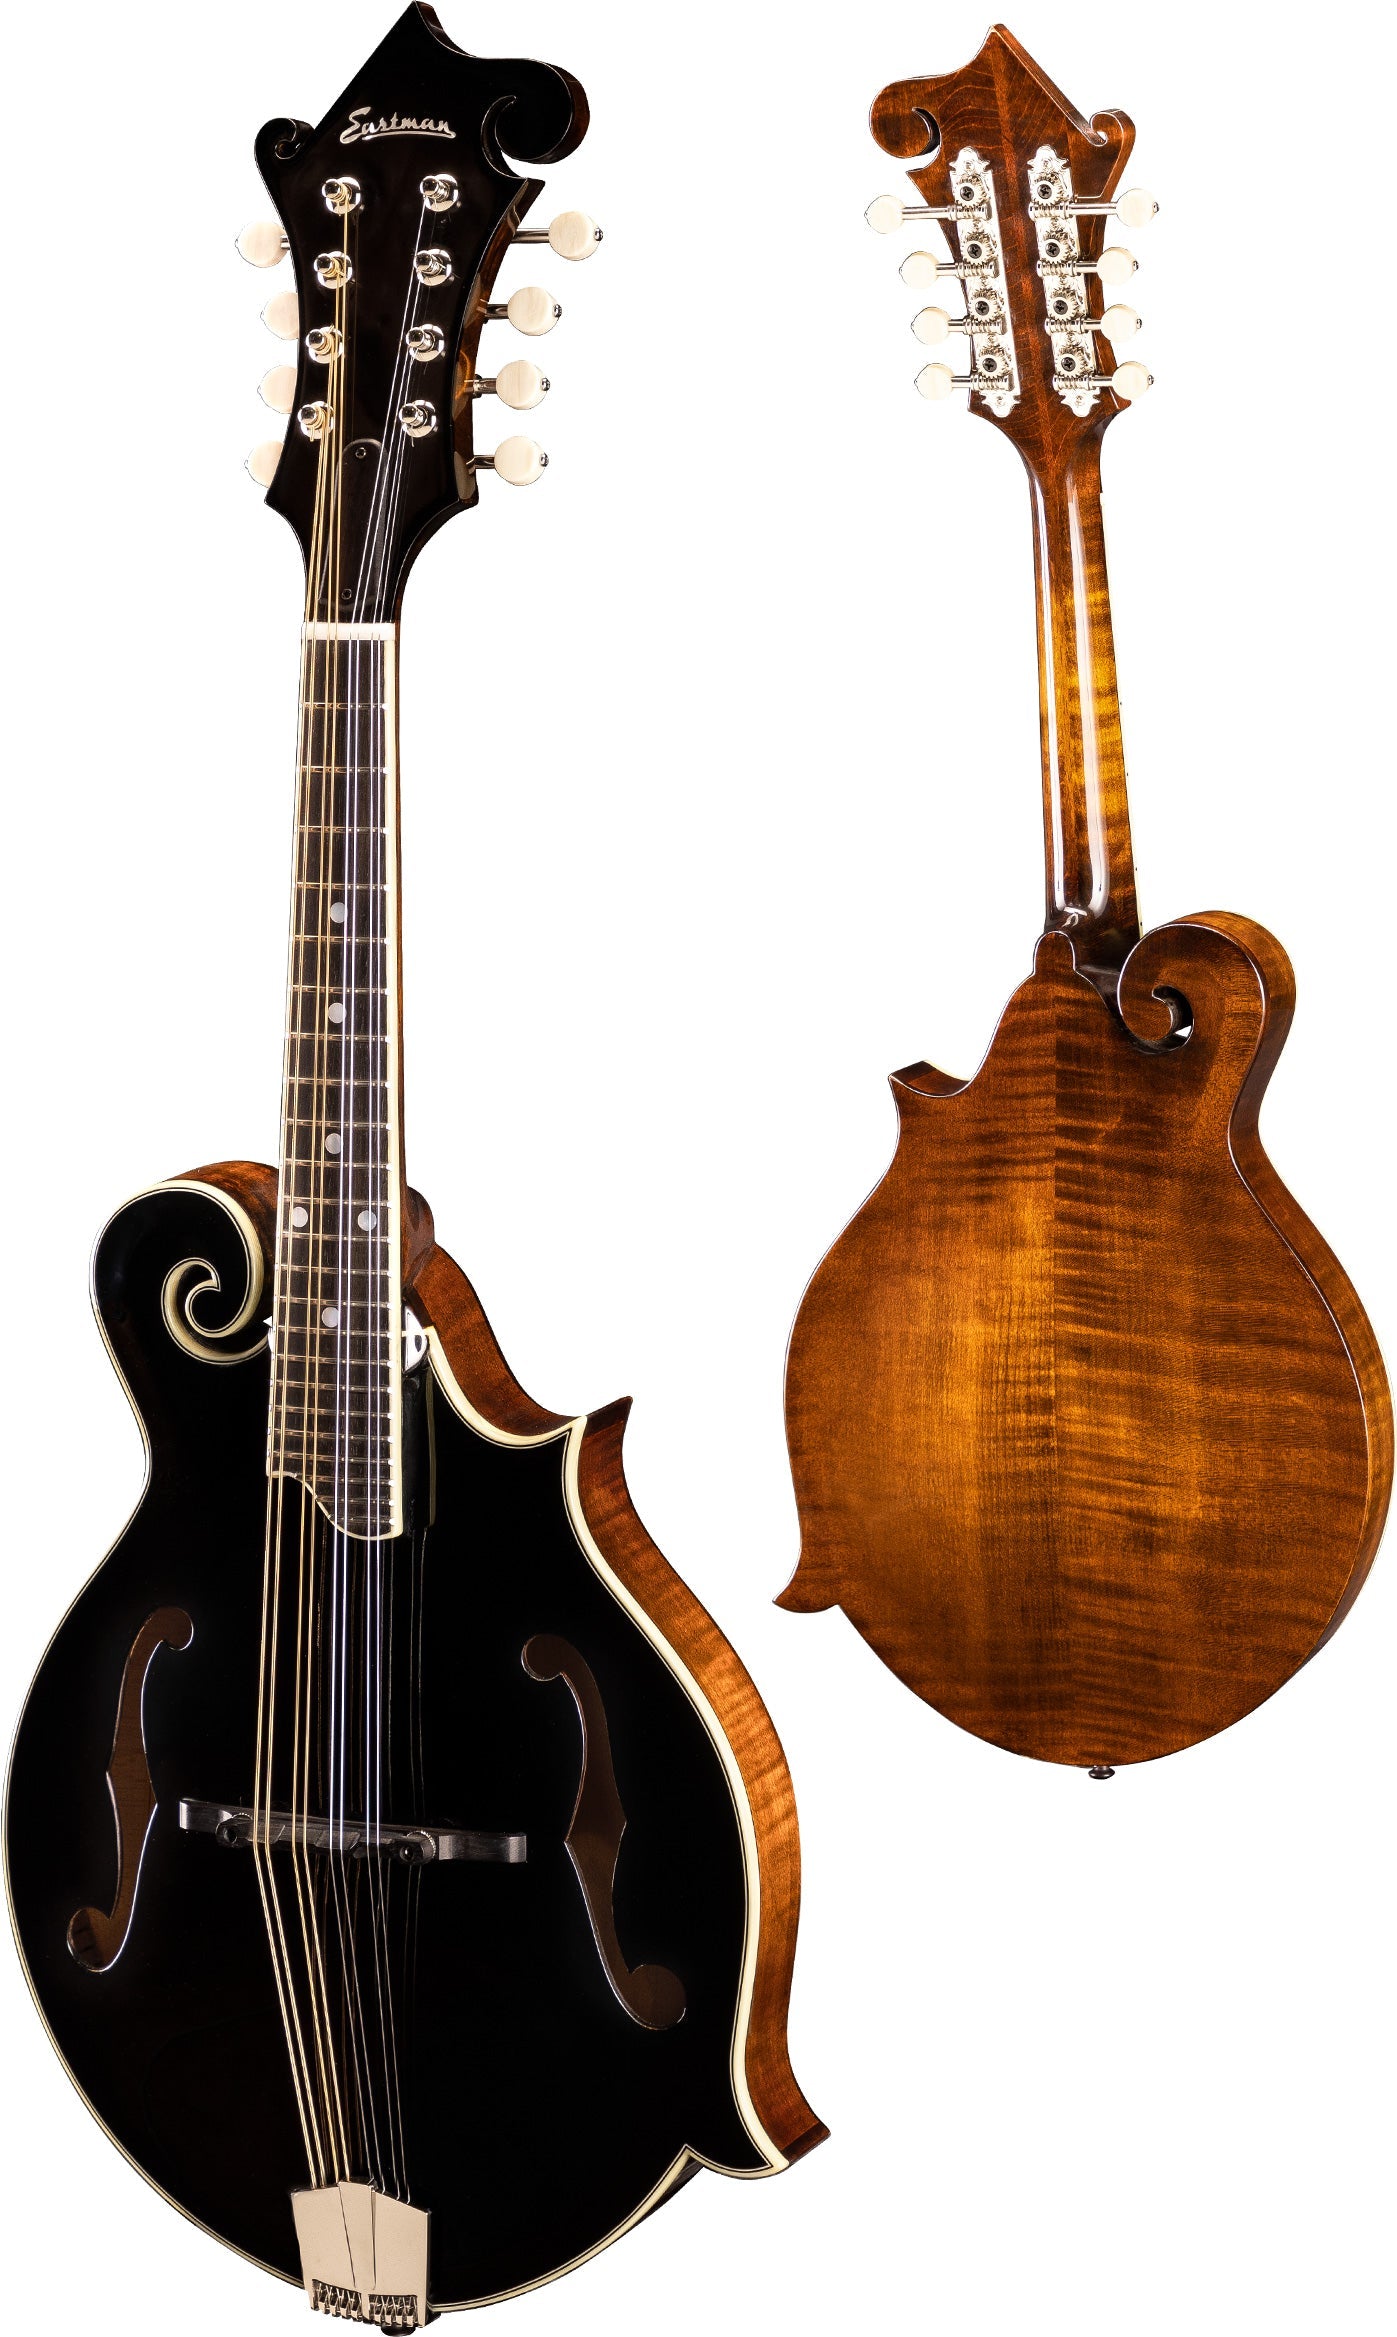 Eastman MD515-BK-LTD F-style F-holes Mandolin, Mandolin for sale at Richards Guitars.